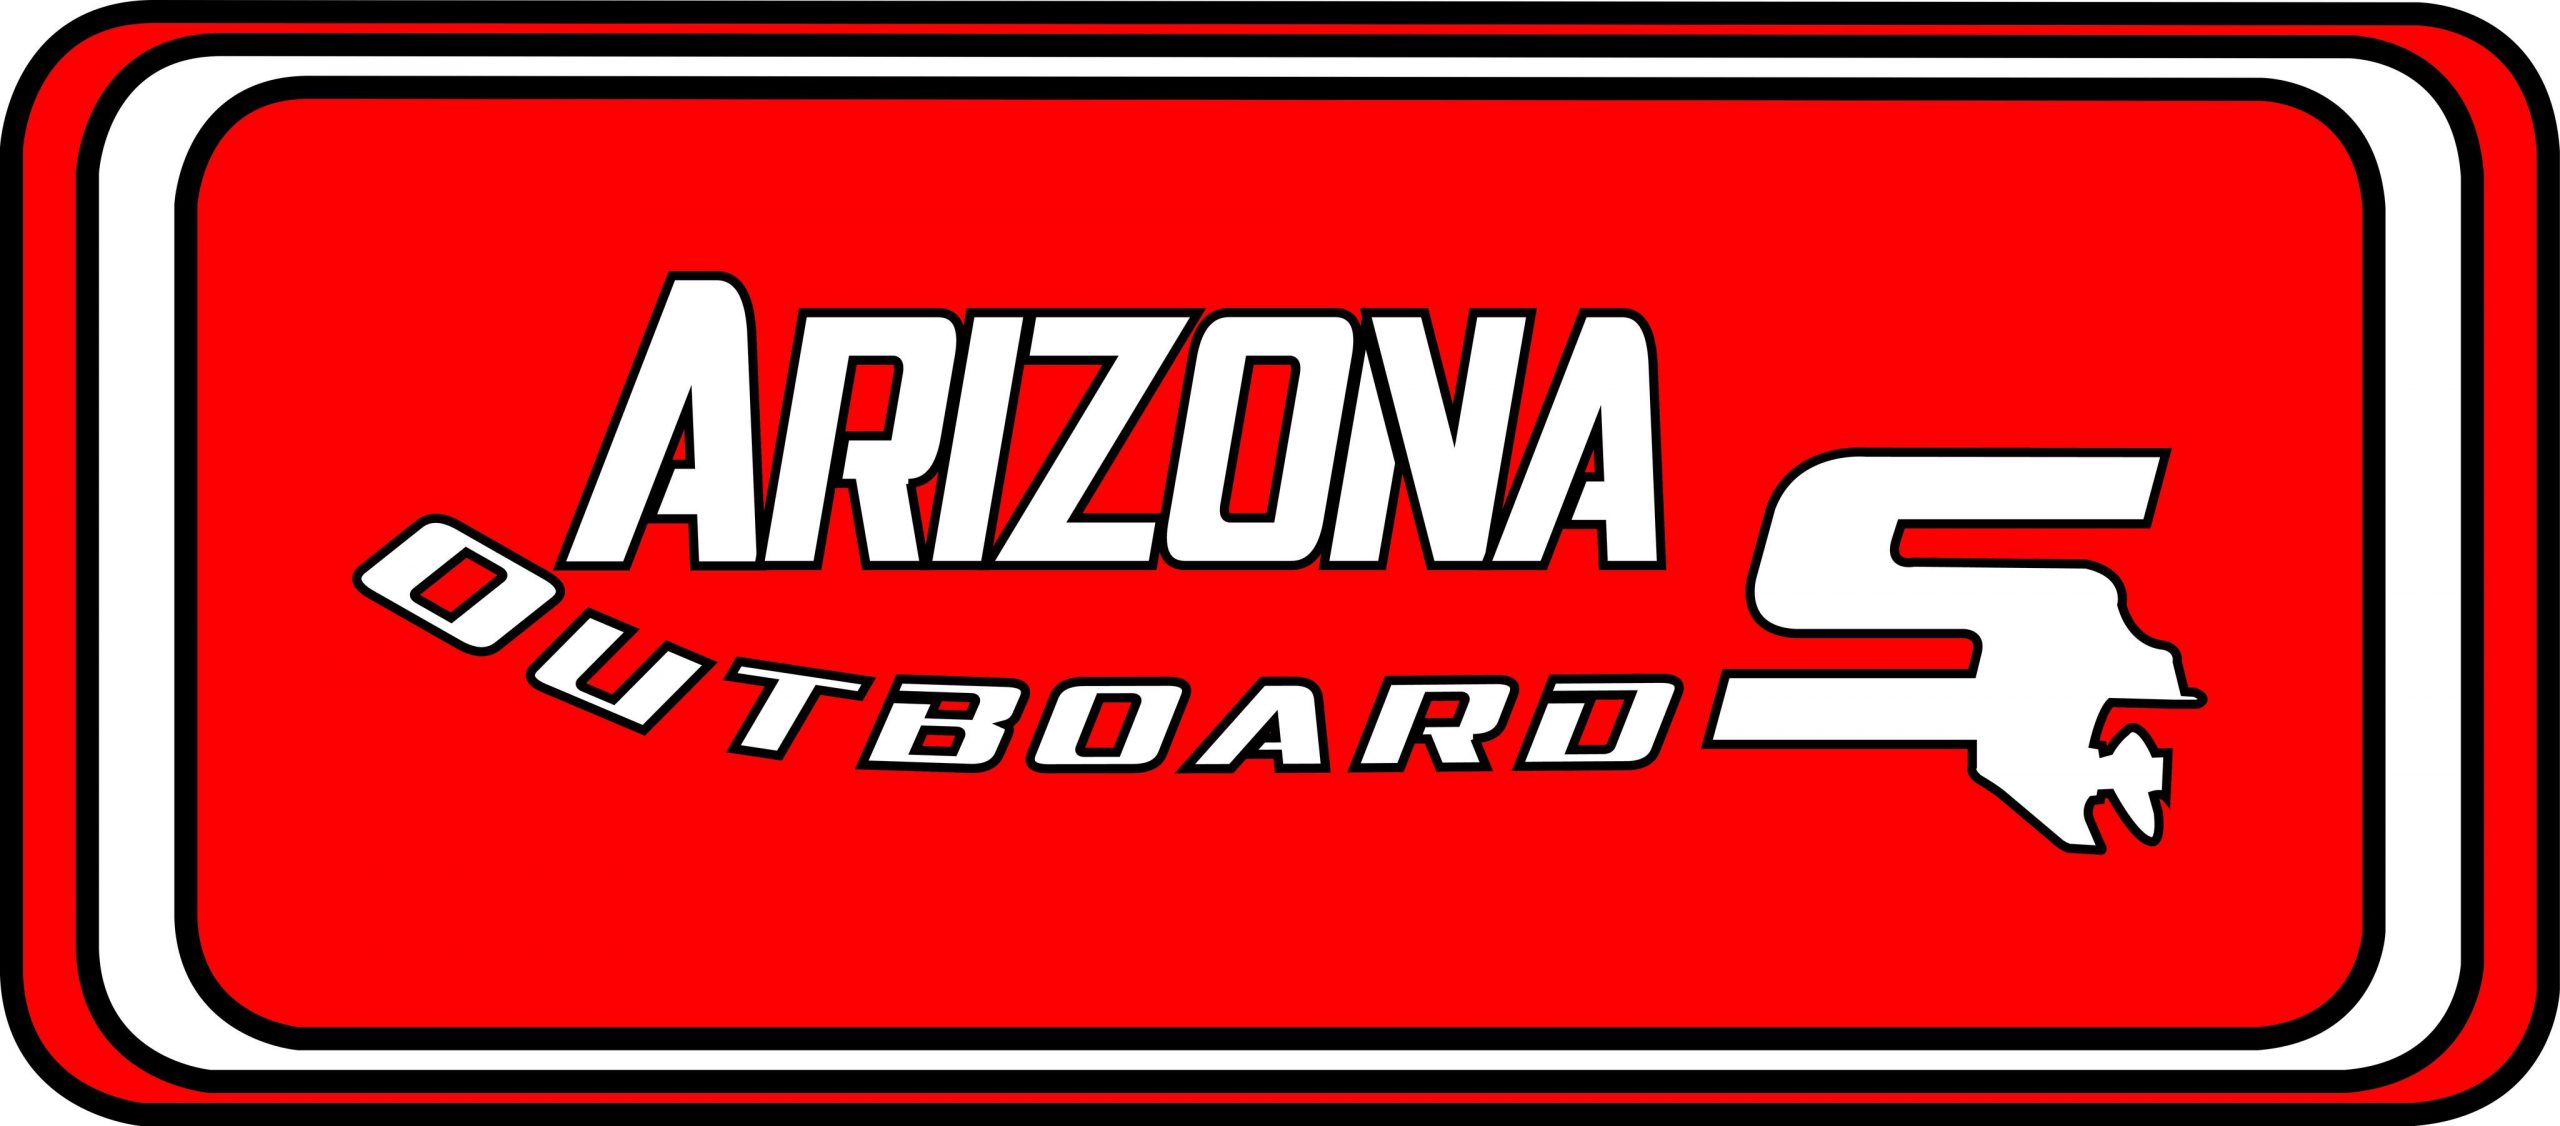 Arizona outboards